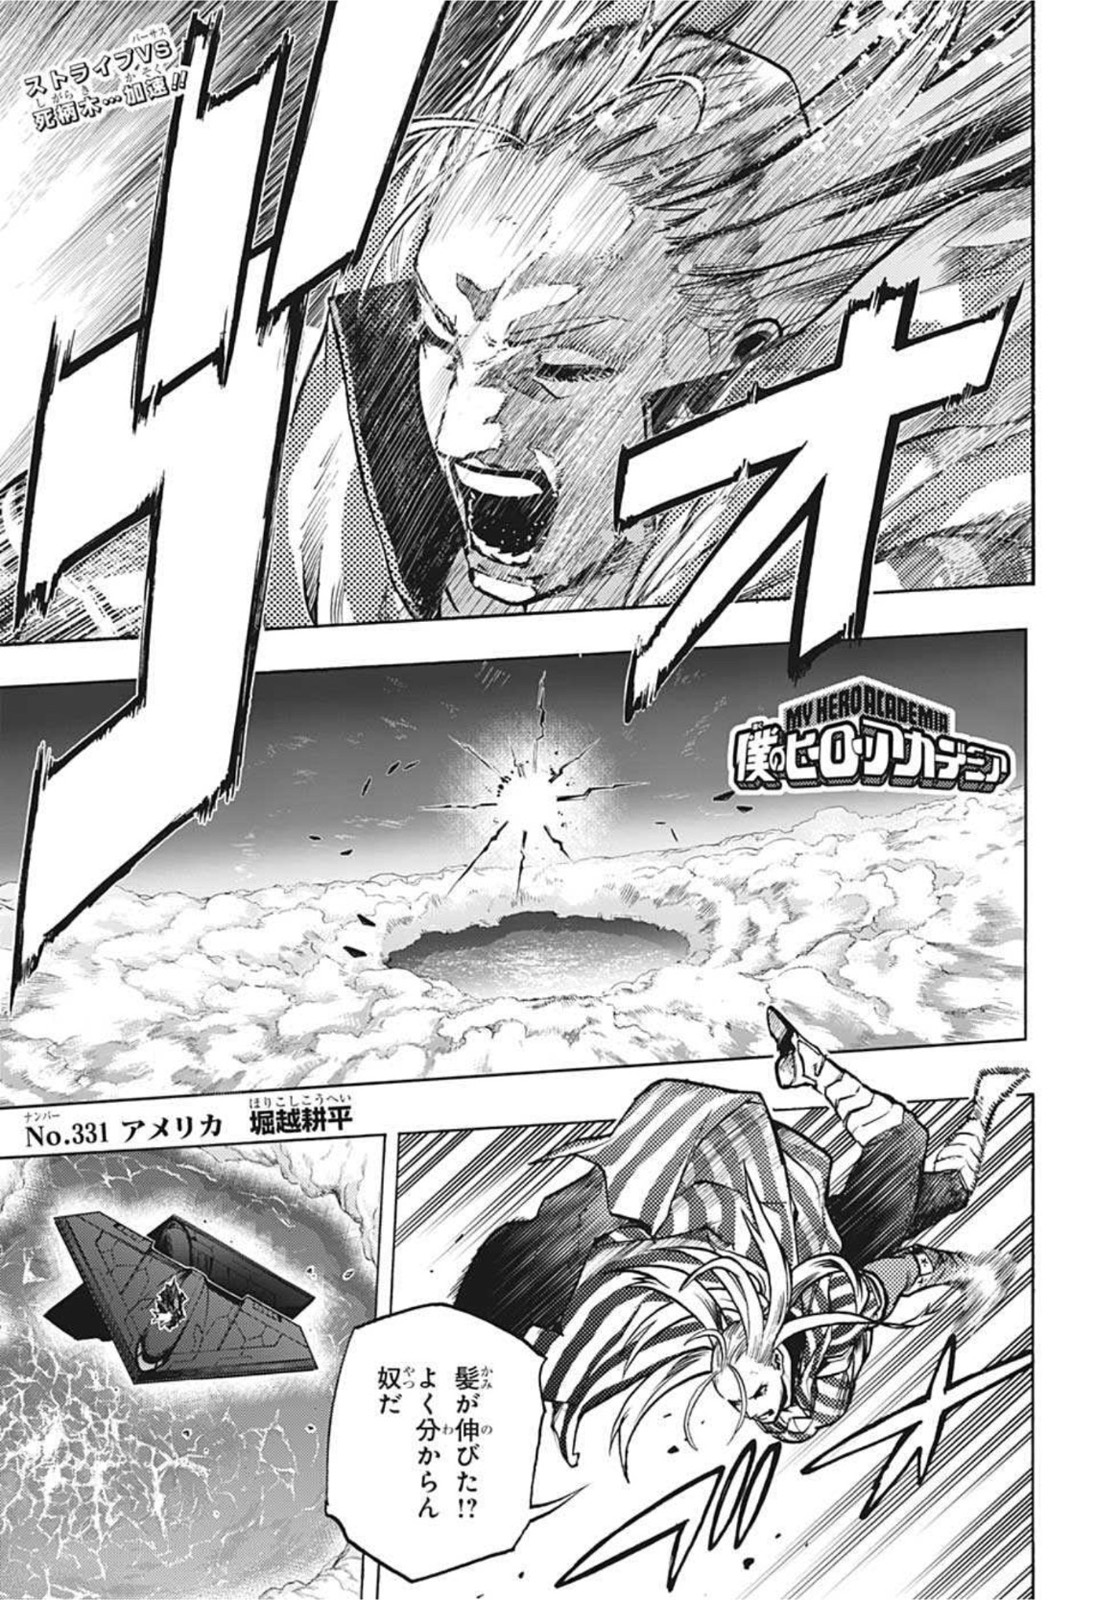 Boku no Hero Academia - Chapter 331 - Page 1